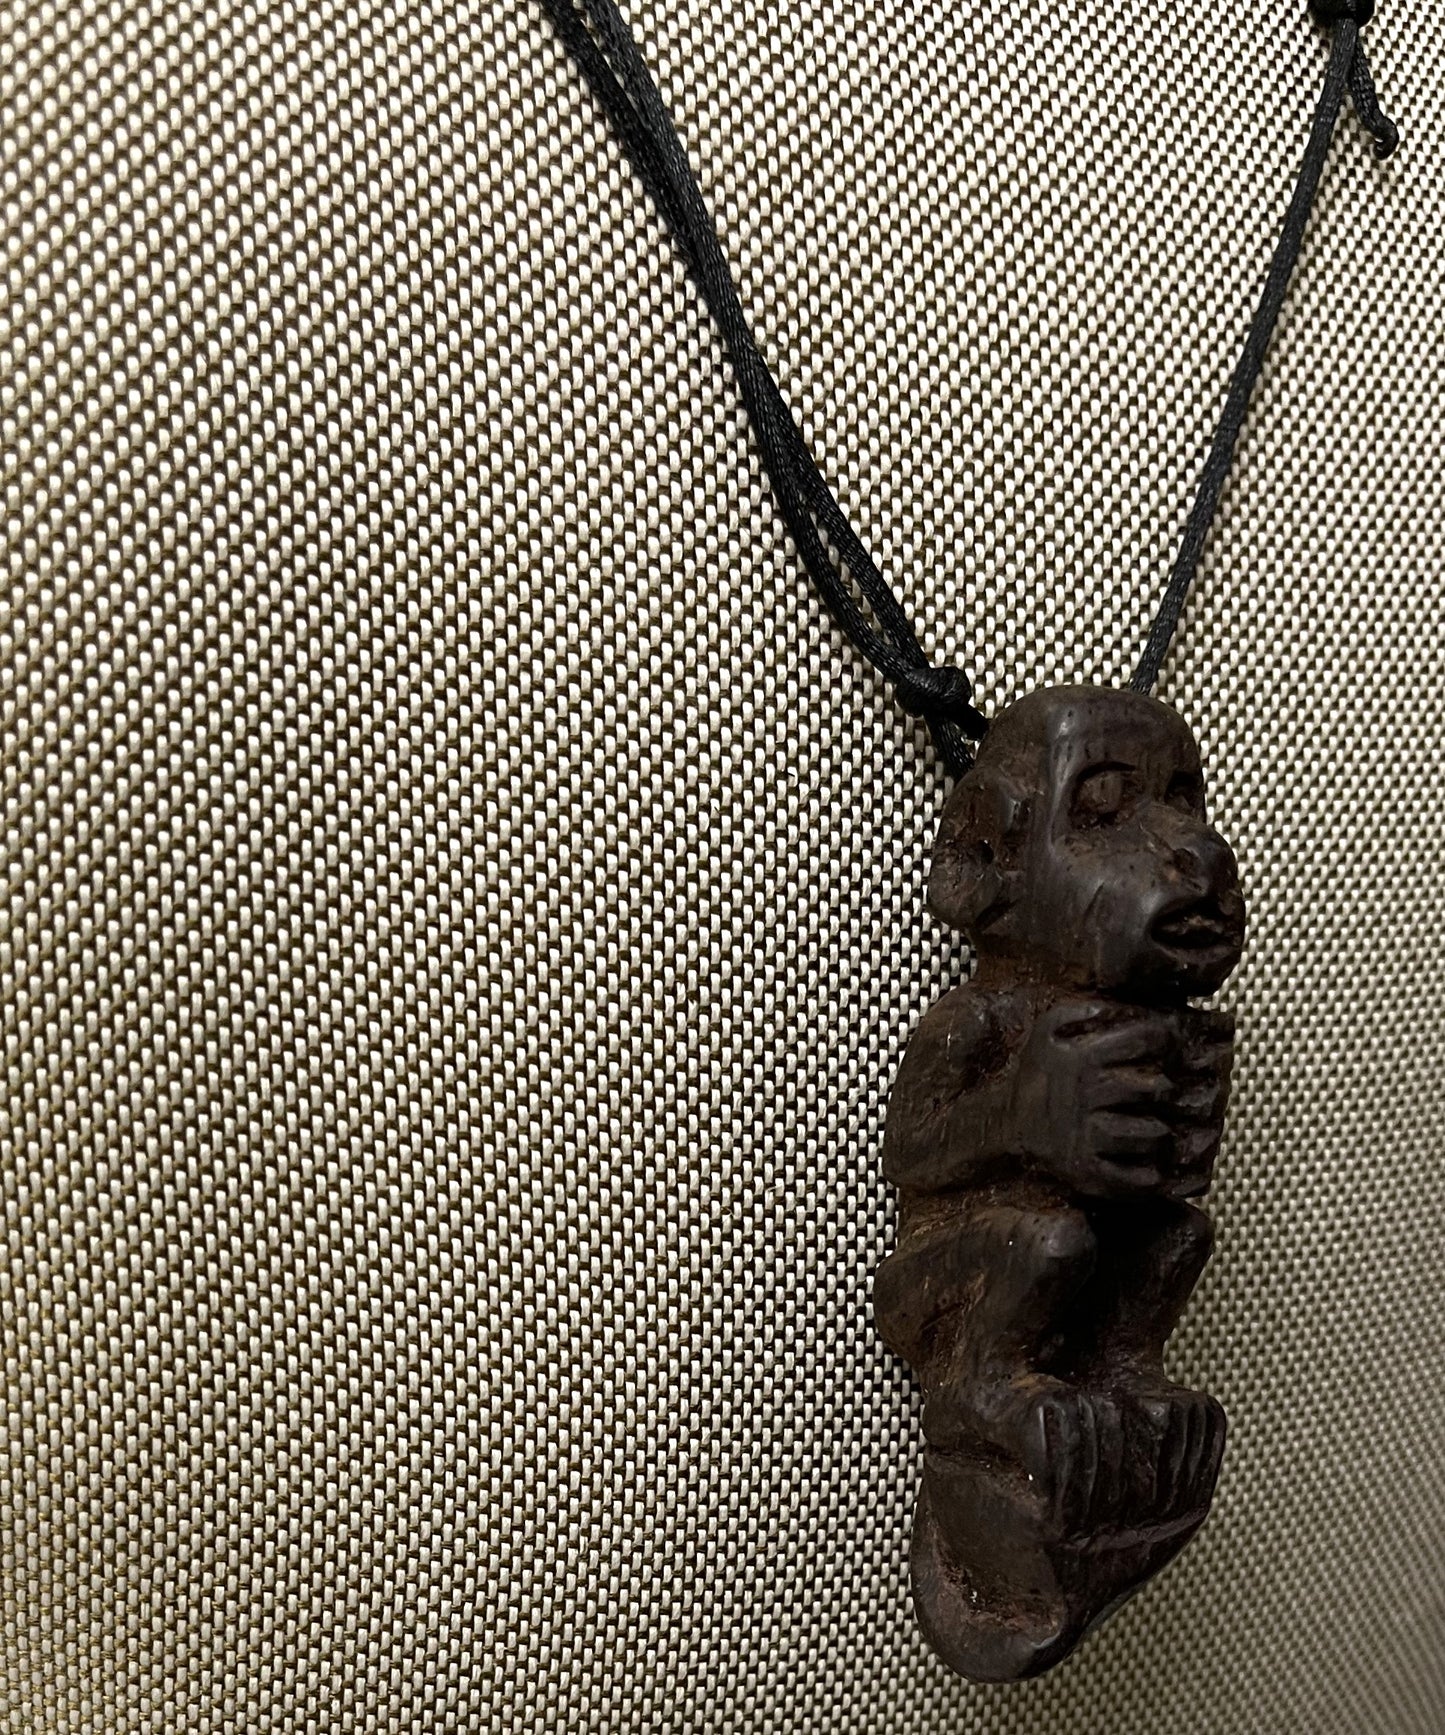 Delicately Carved Cocobolo Monkey Necklace Pendant Panama